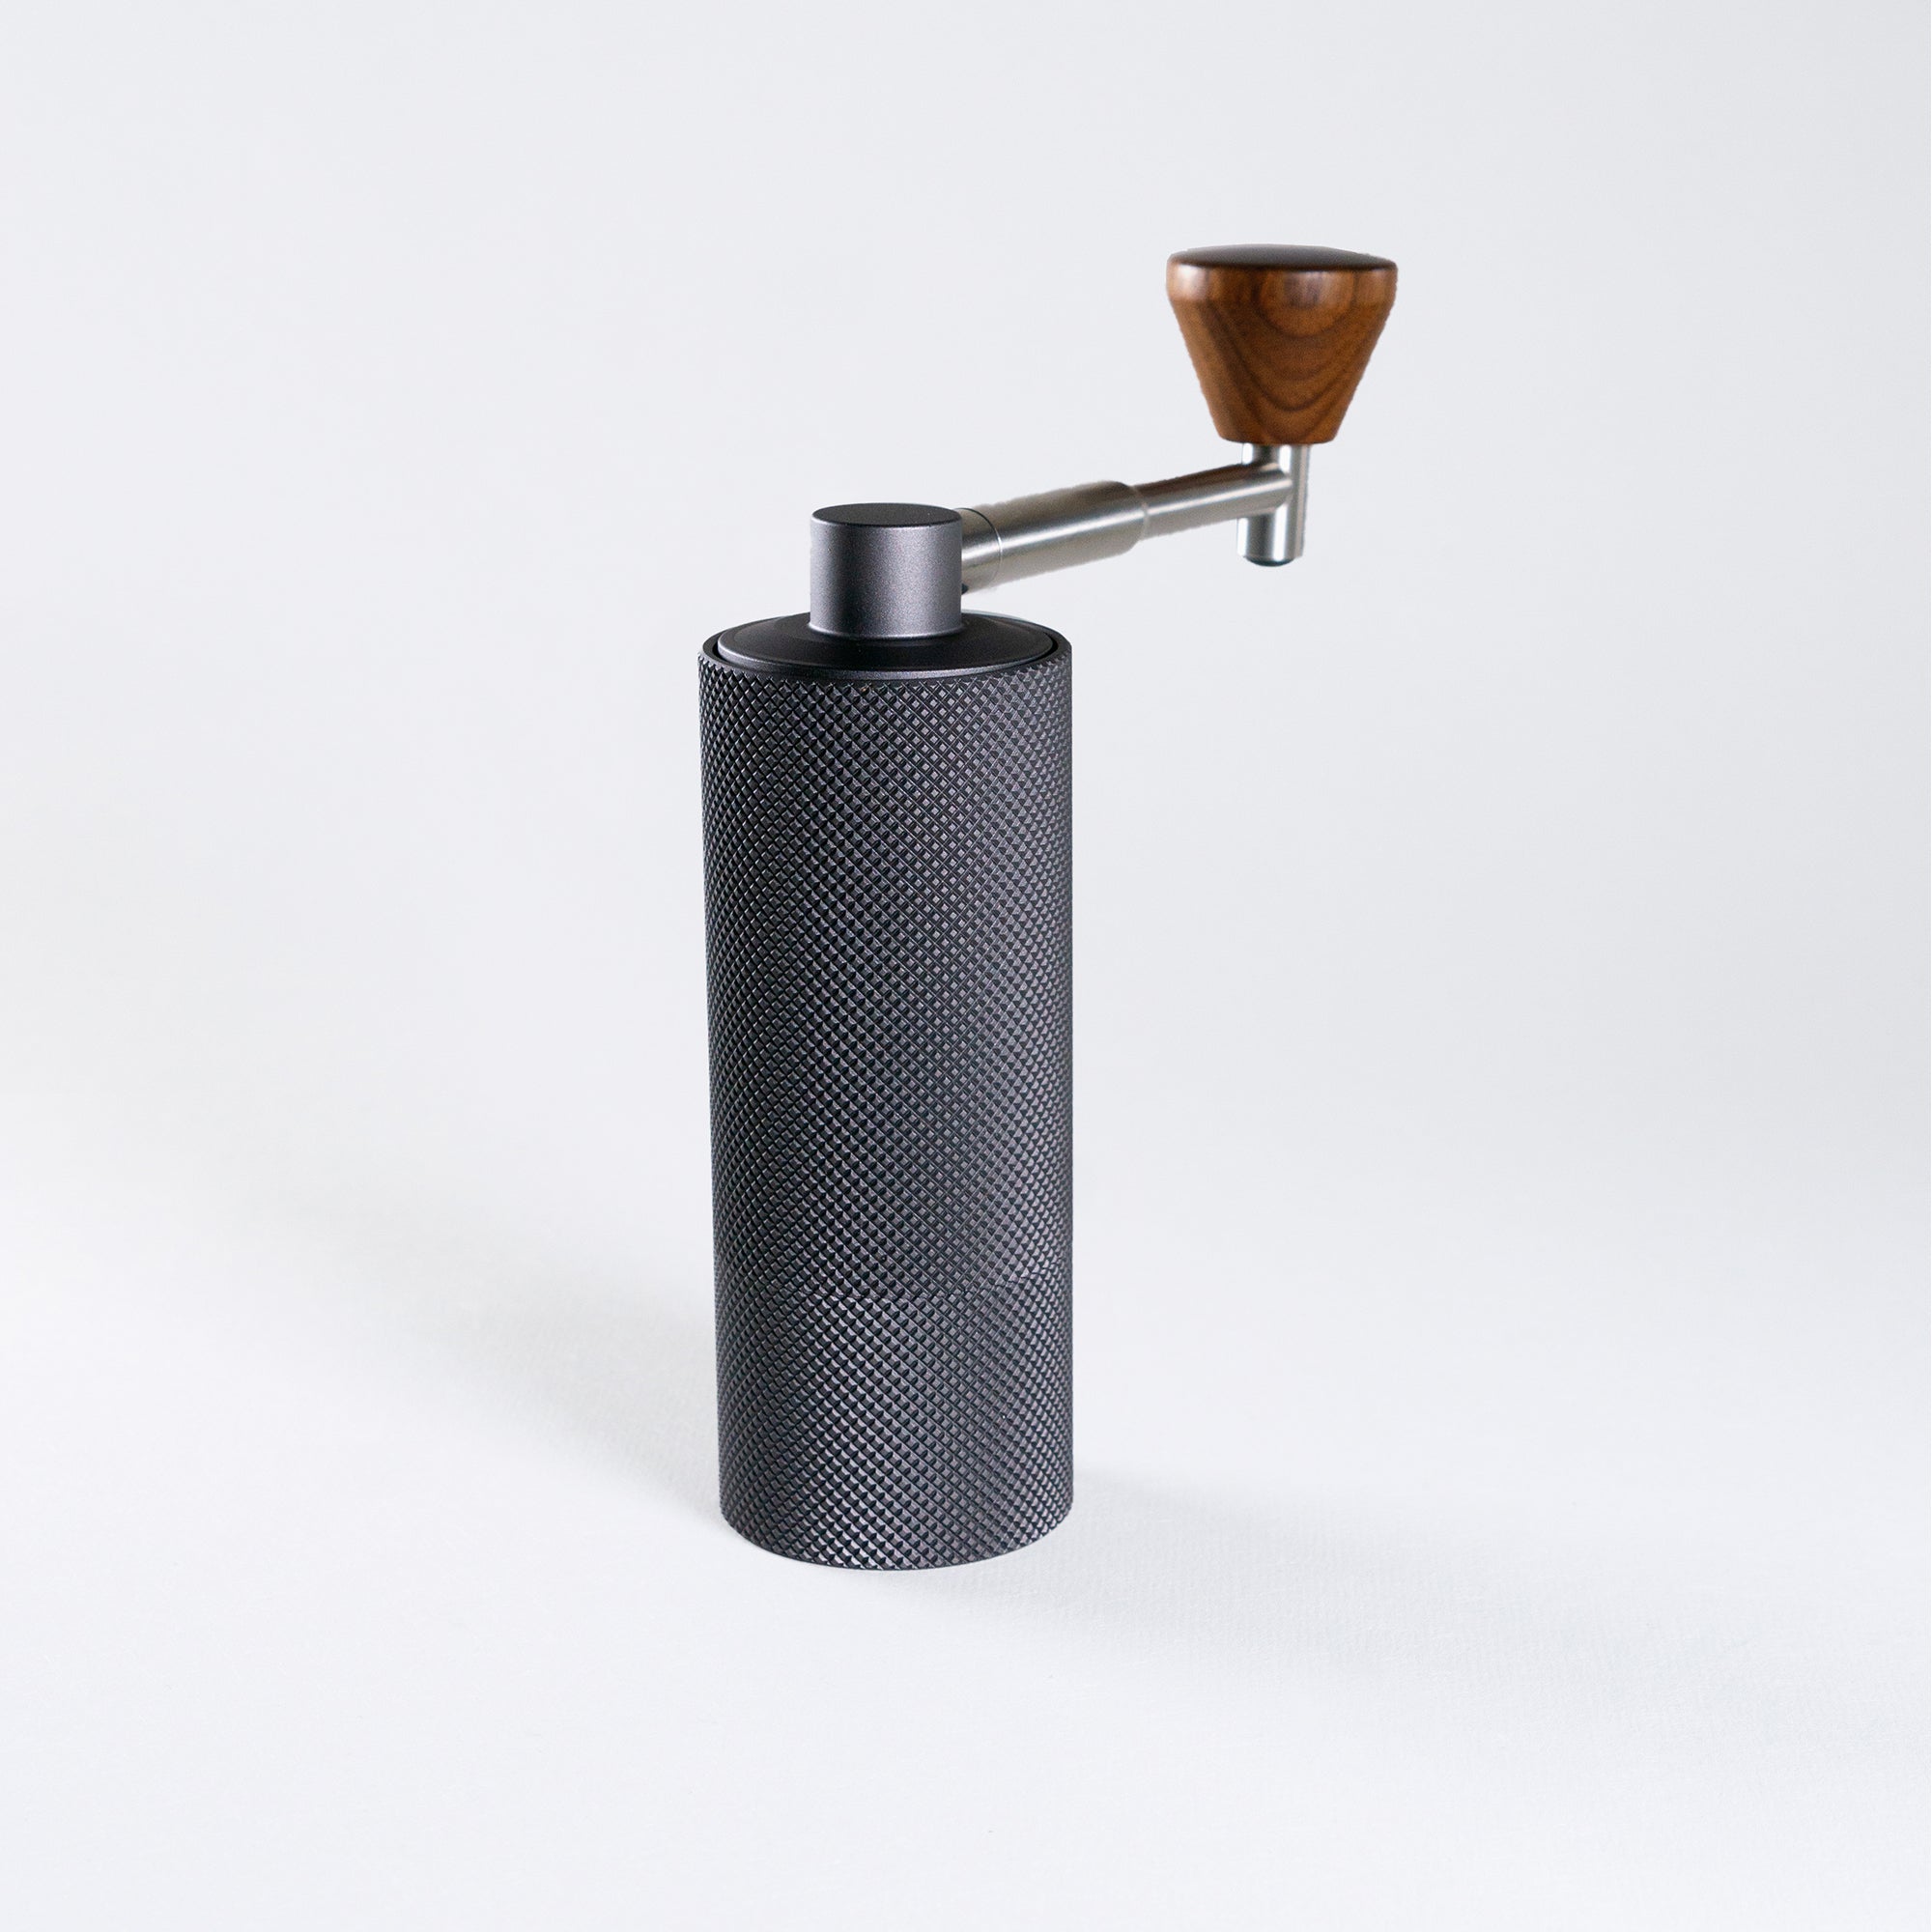 Timemore Nano grinder - Morgon Coffee Roasters